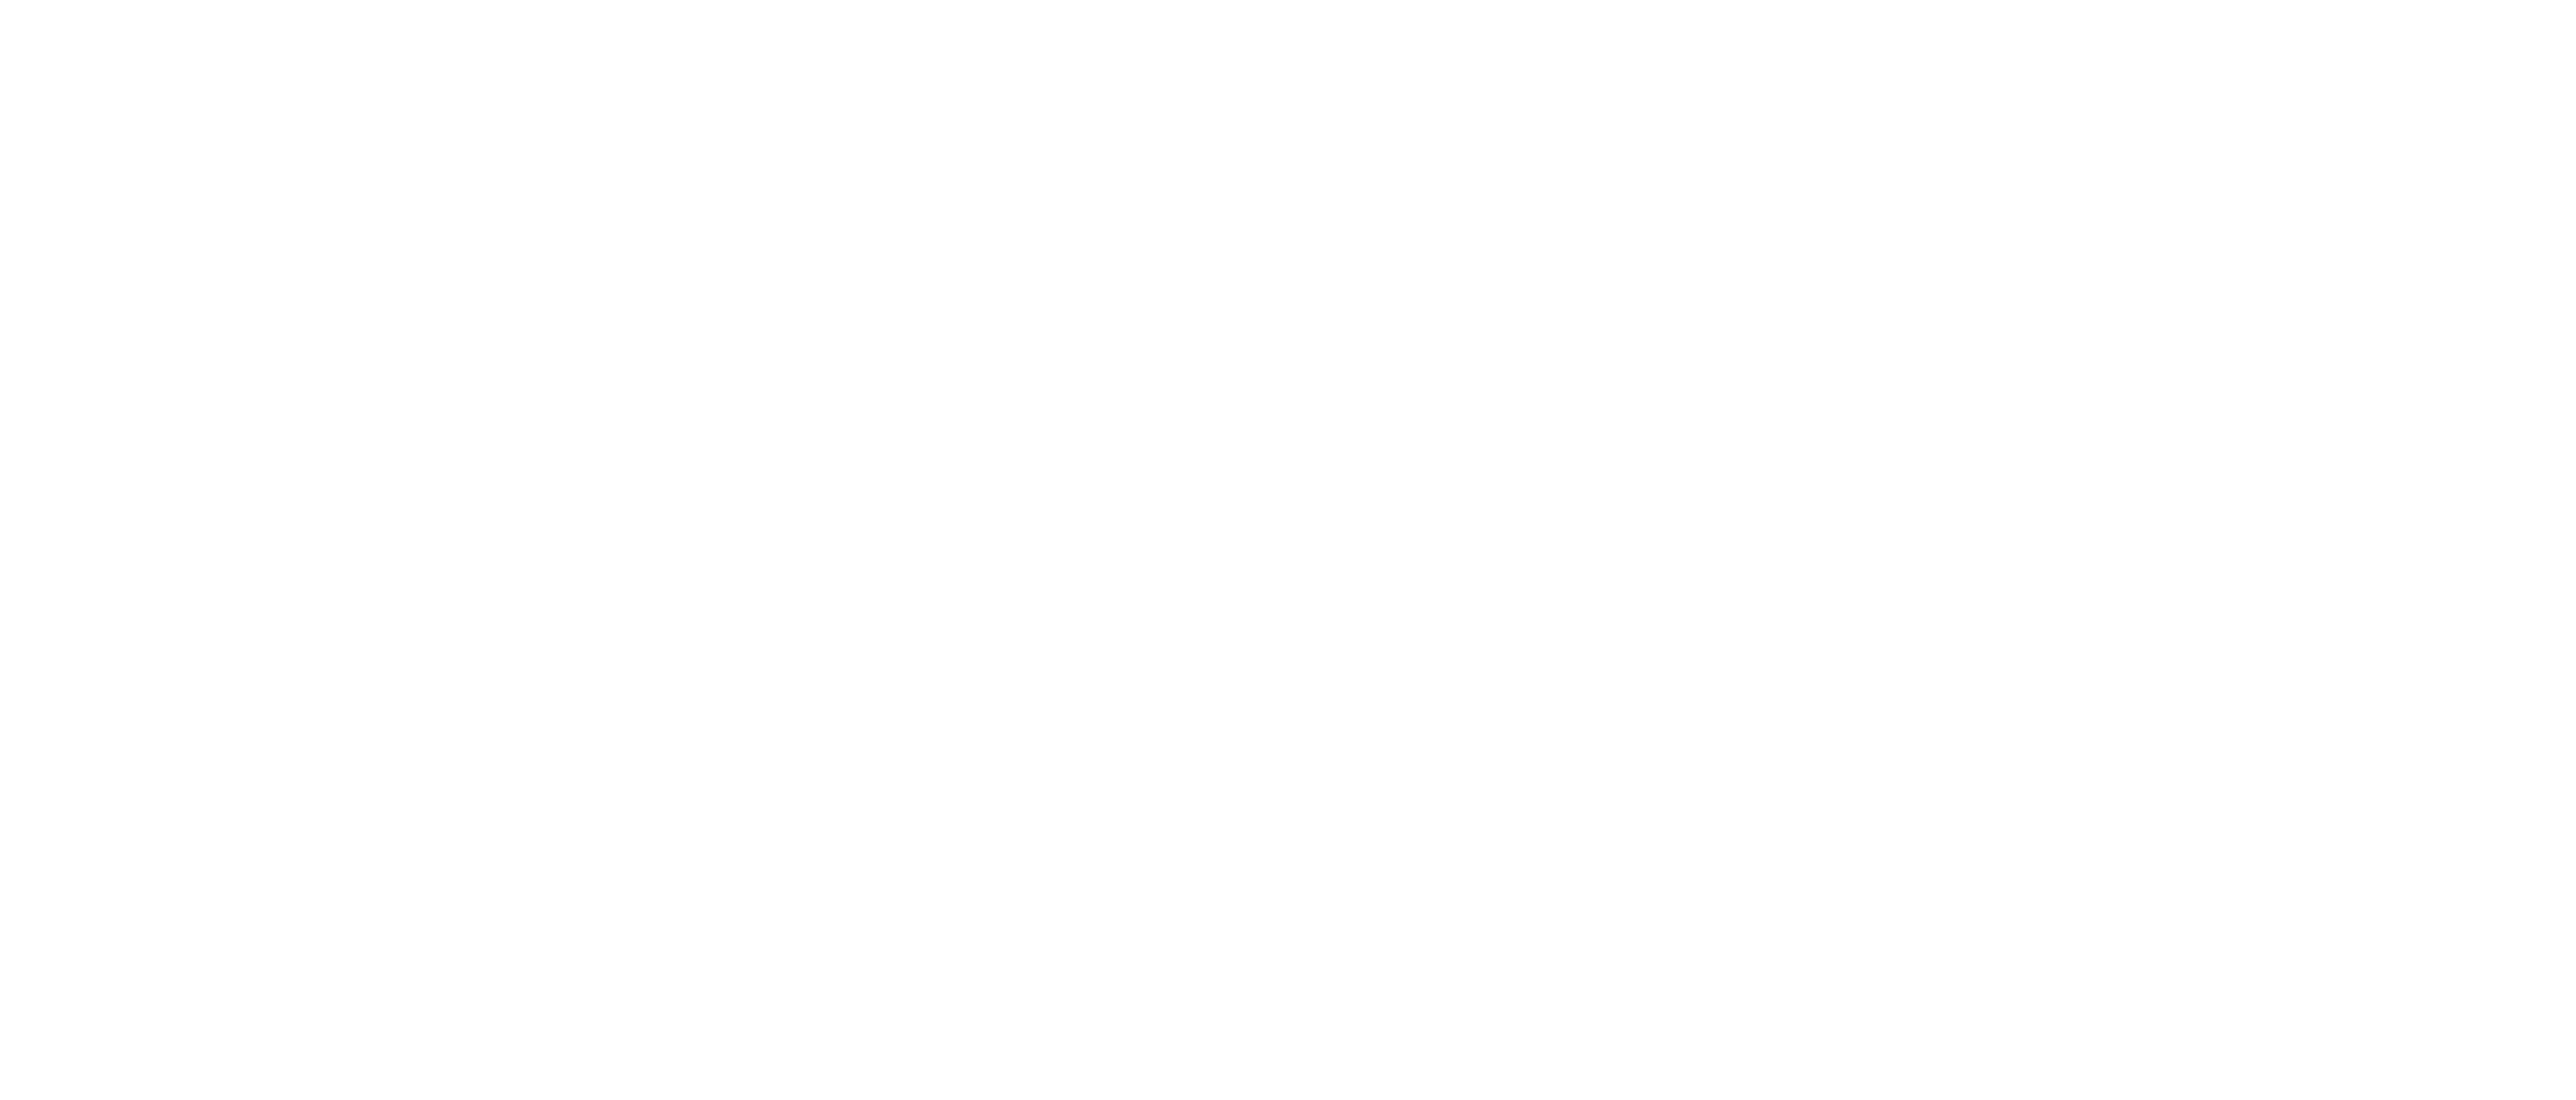 F.lowers